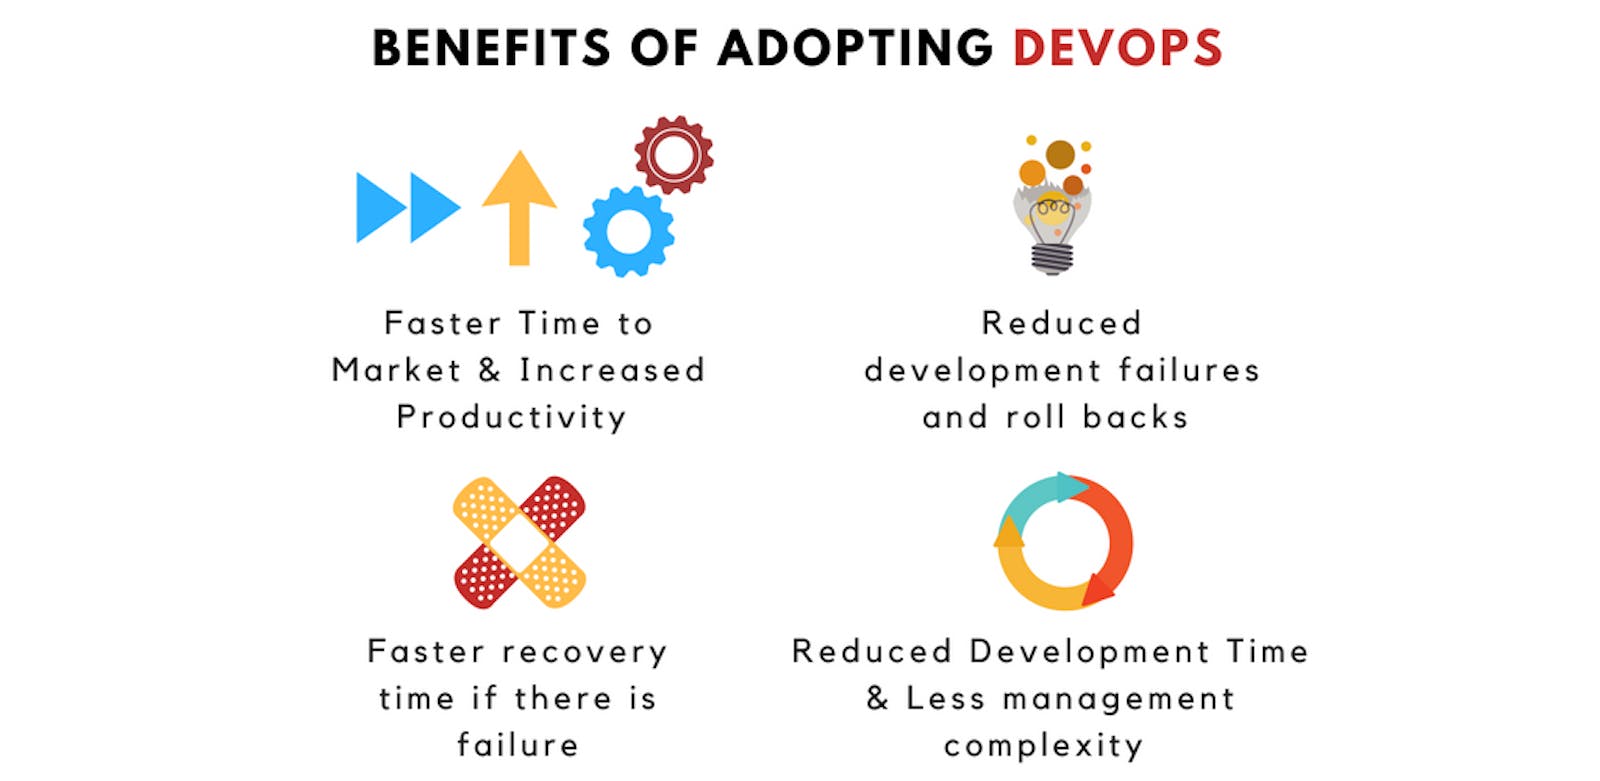 Key benefits of adopting DevOps: